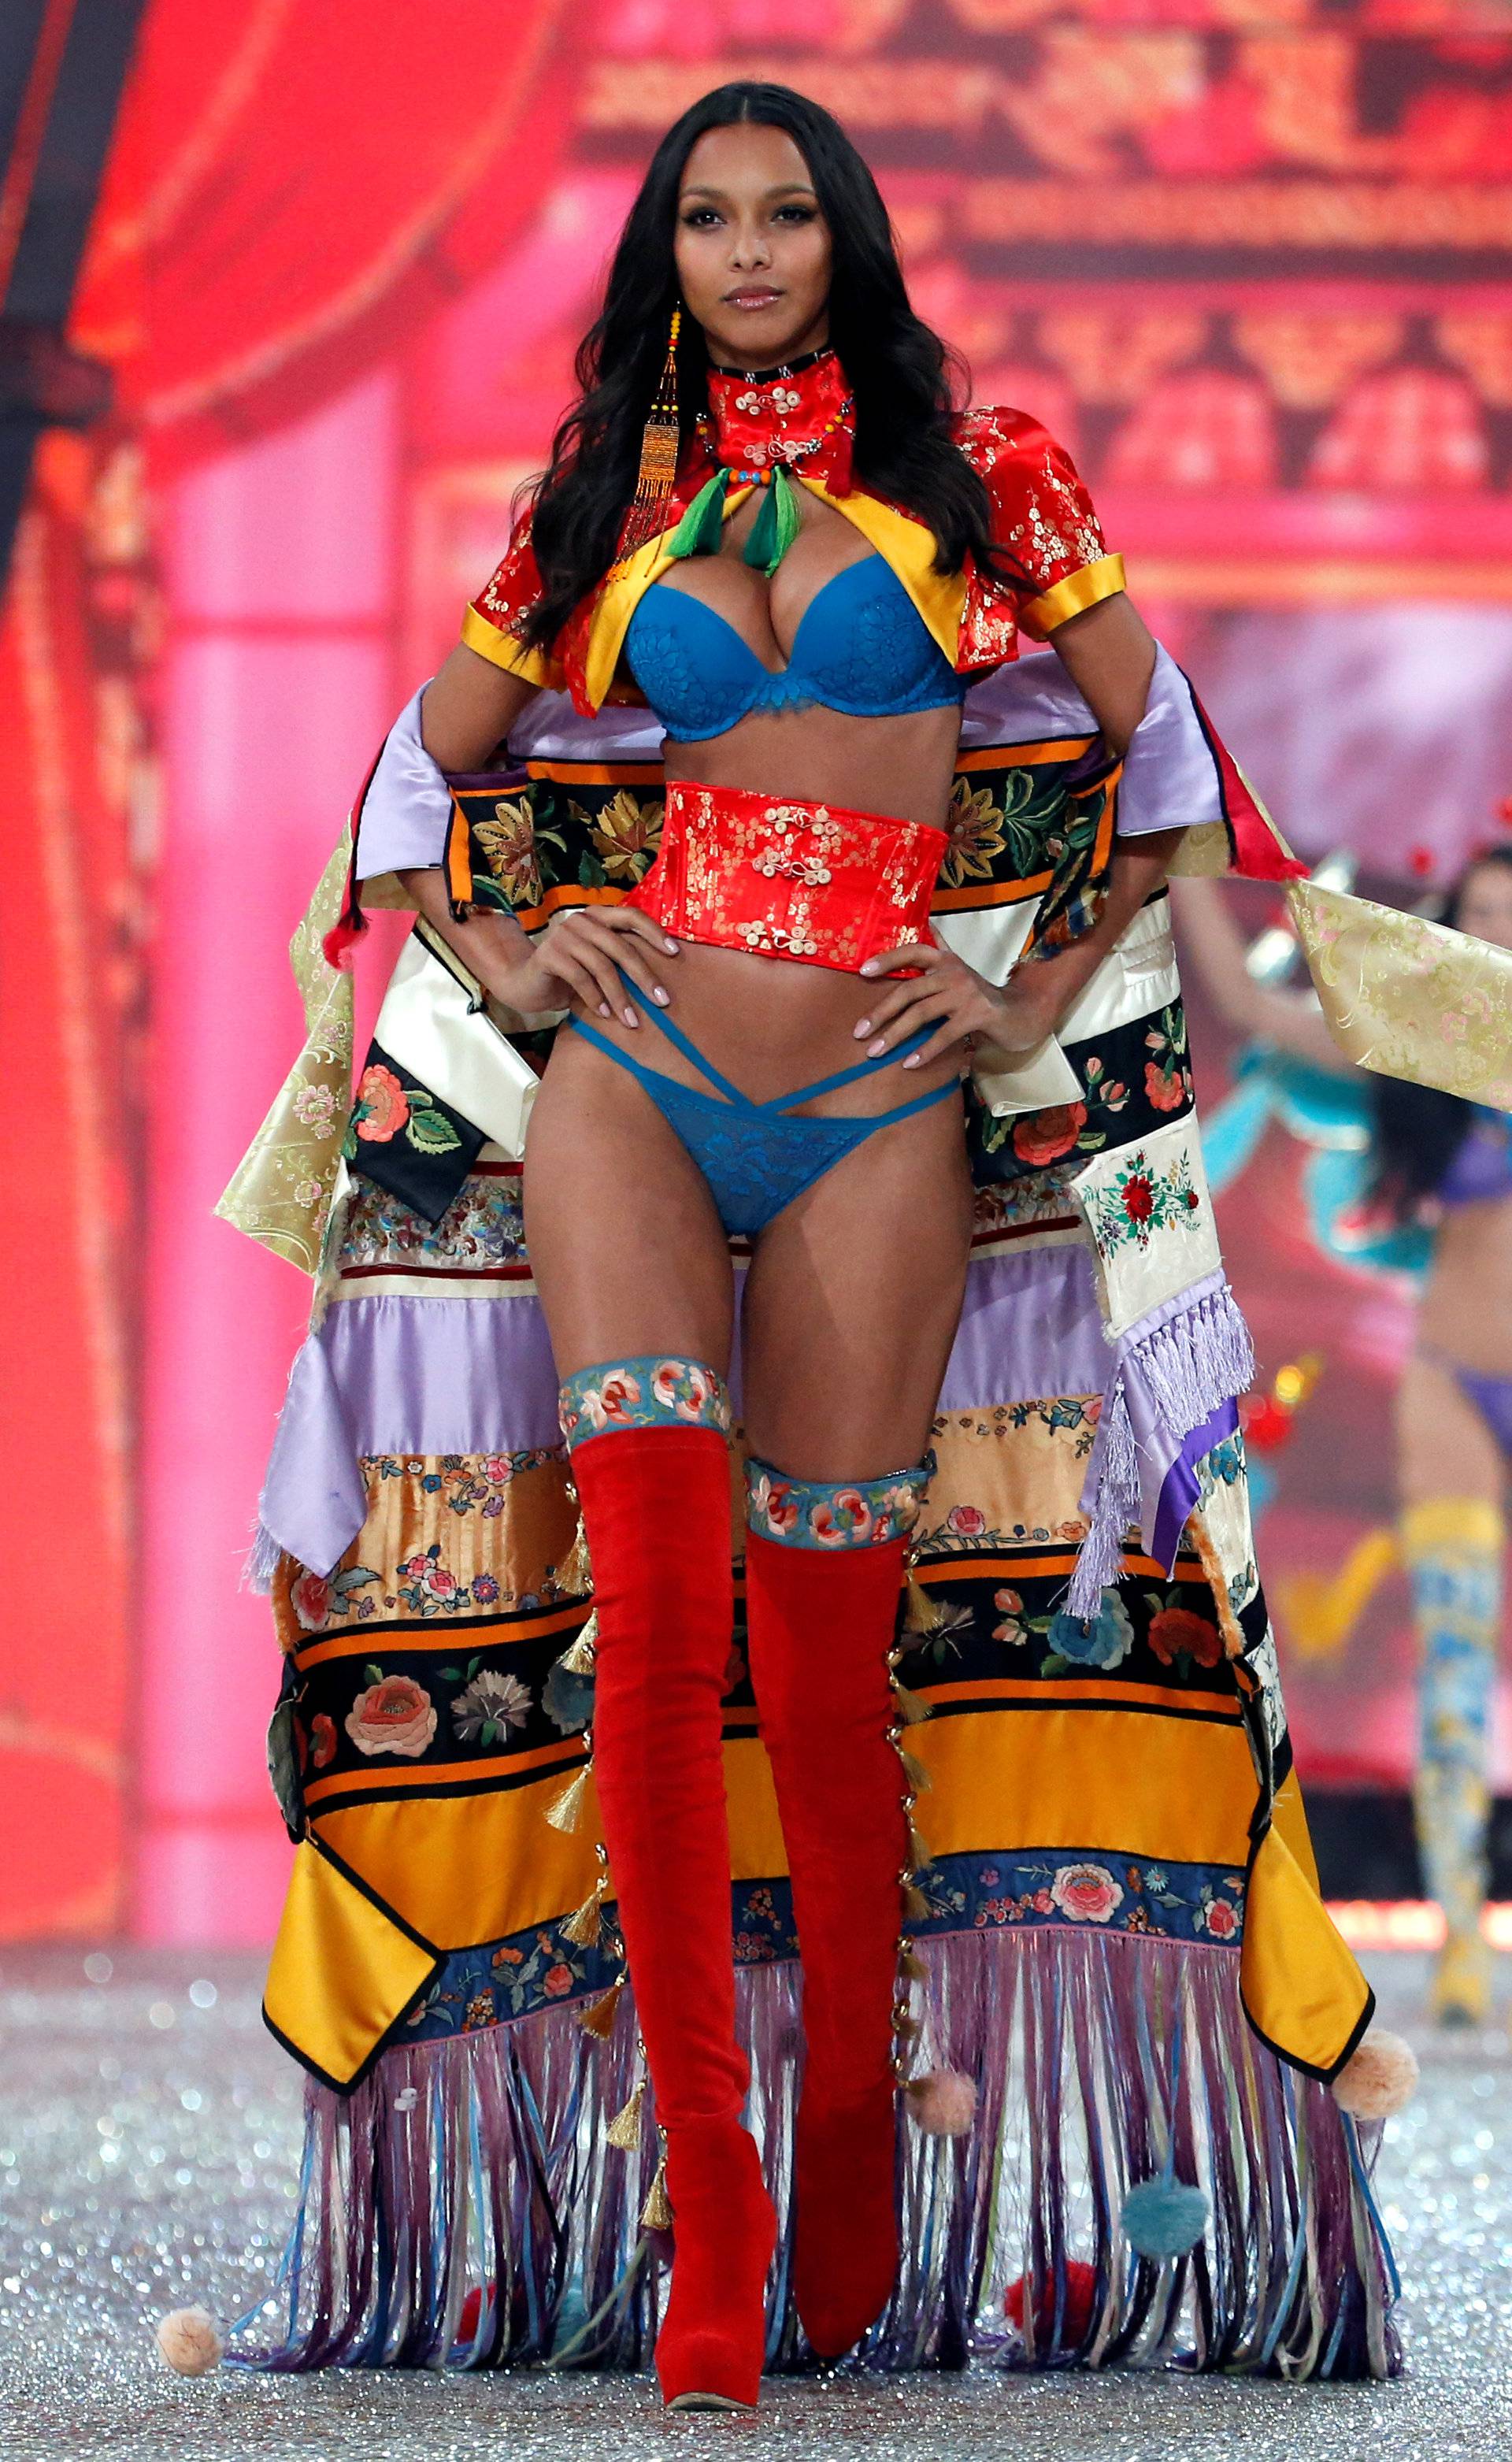 Model Lais Ribeiro presents a creation during the 2016 Victoria's Secret Fashion Show at the Grand Palais in Paris